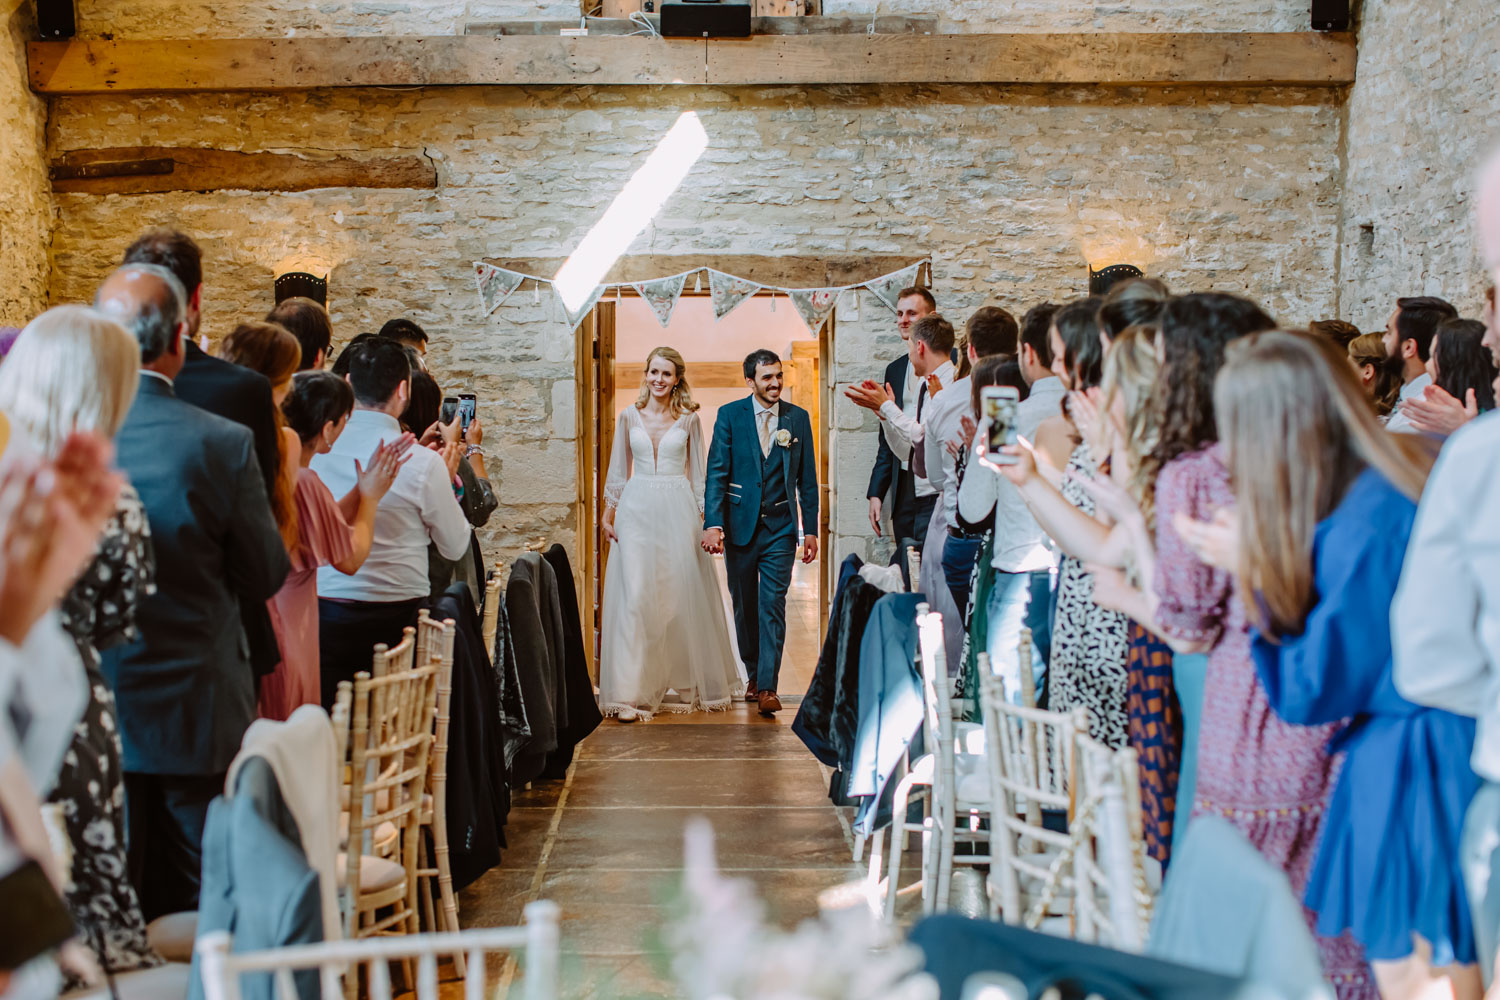 Oxleaze Barn wedding photography - Bride and groom's entrance to the wedding breakfast room 